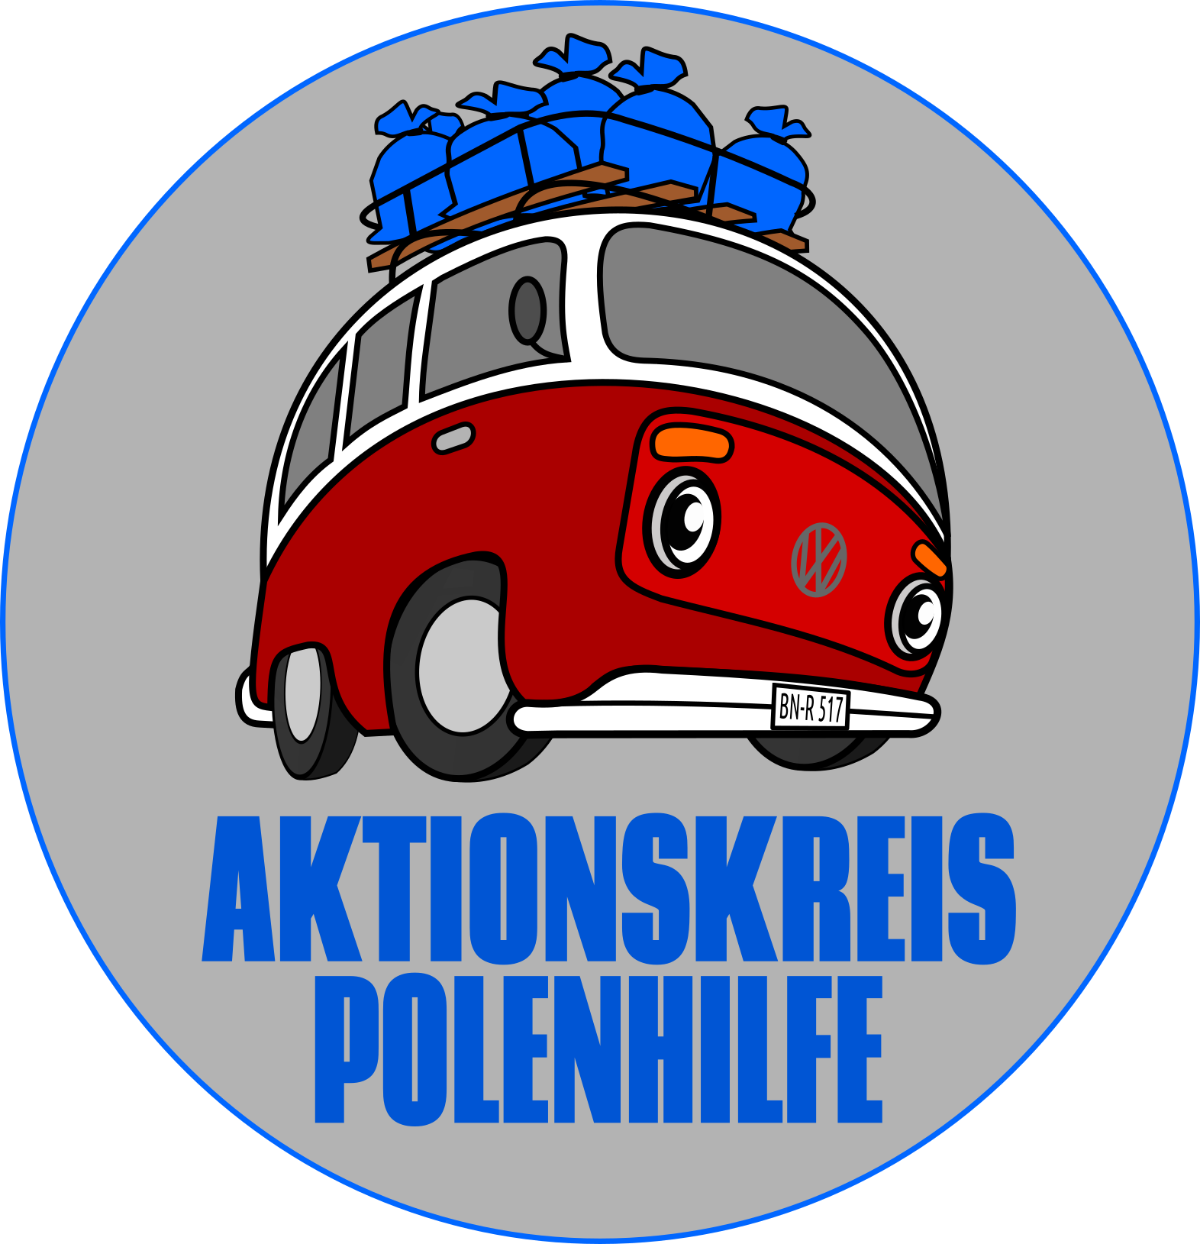 Aktionskreis Polenhilfe Logo